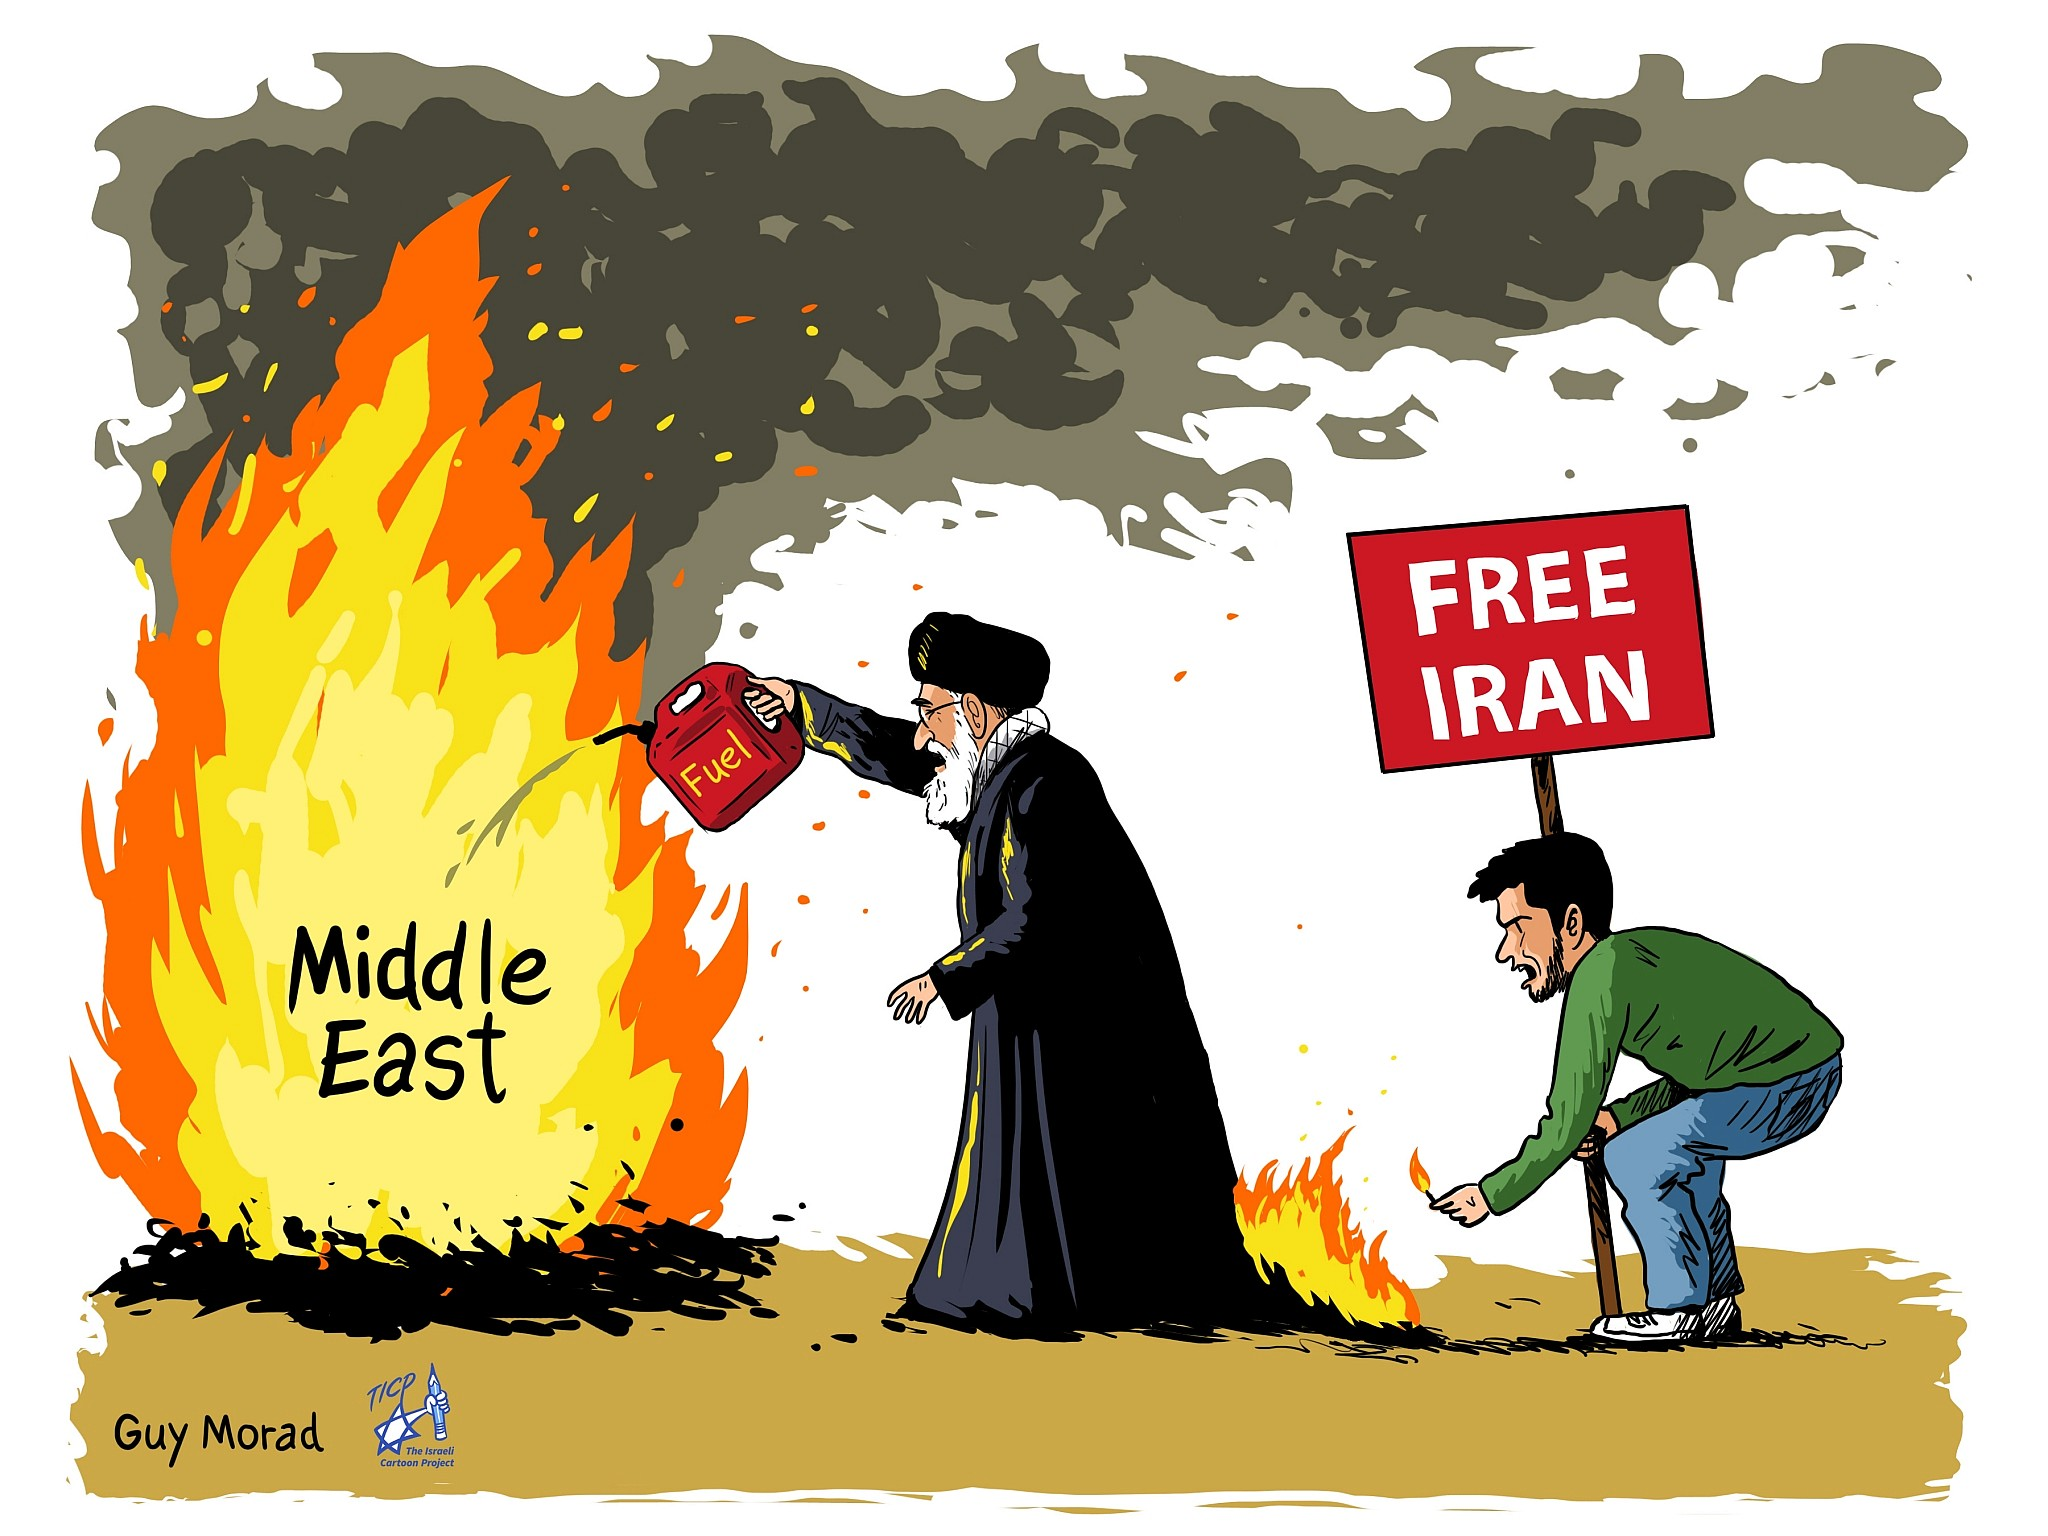 The Iranian regime in limbo